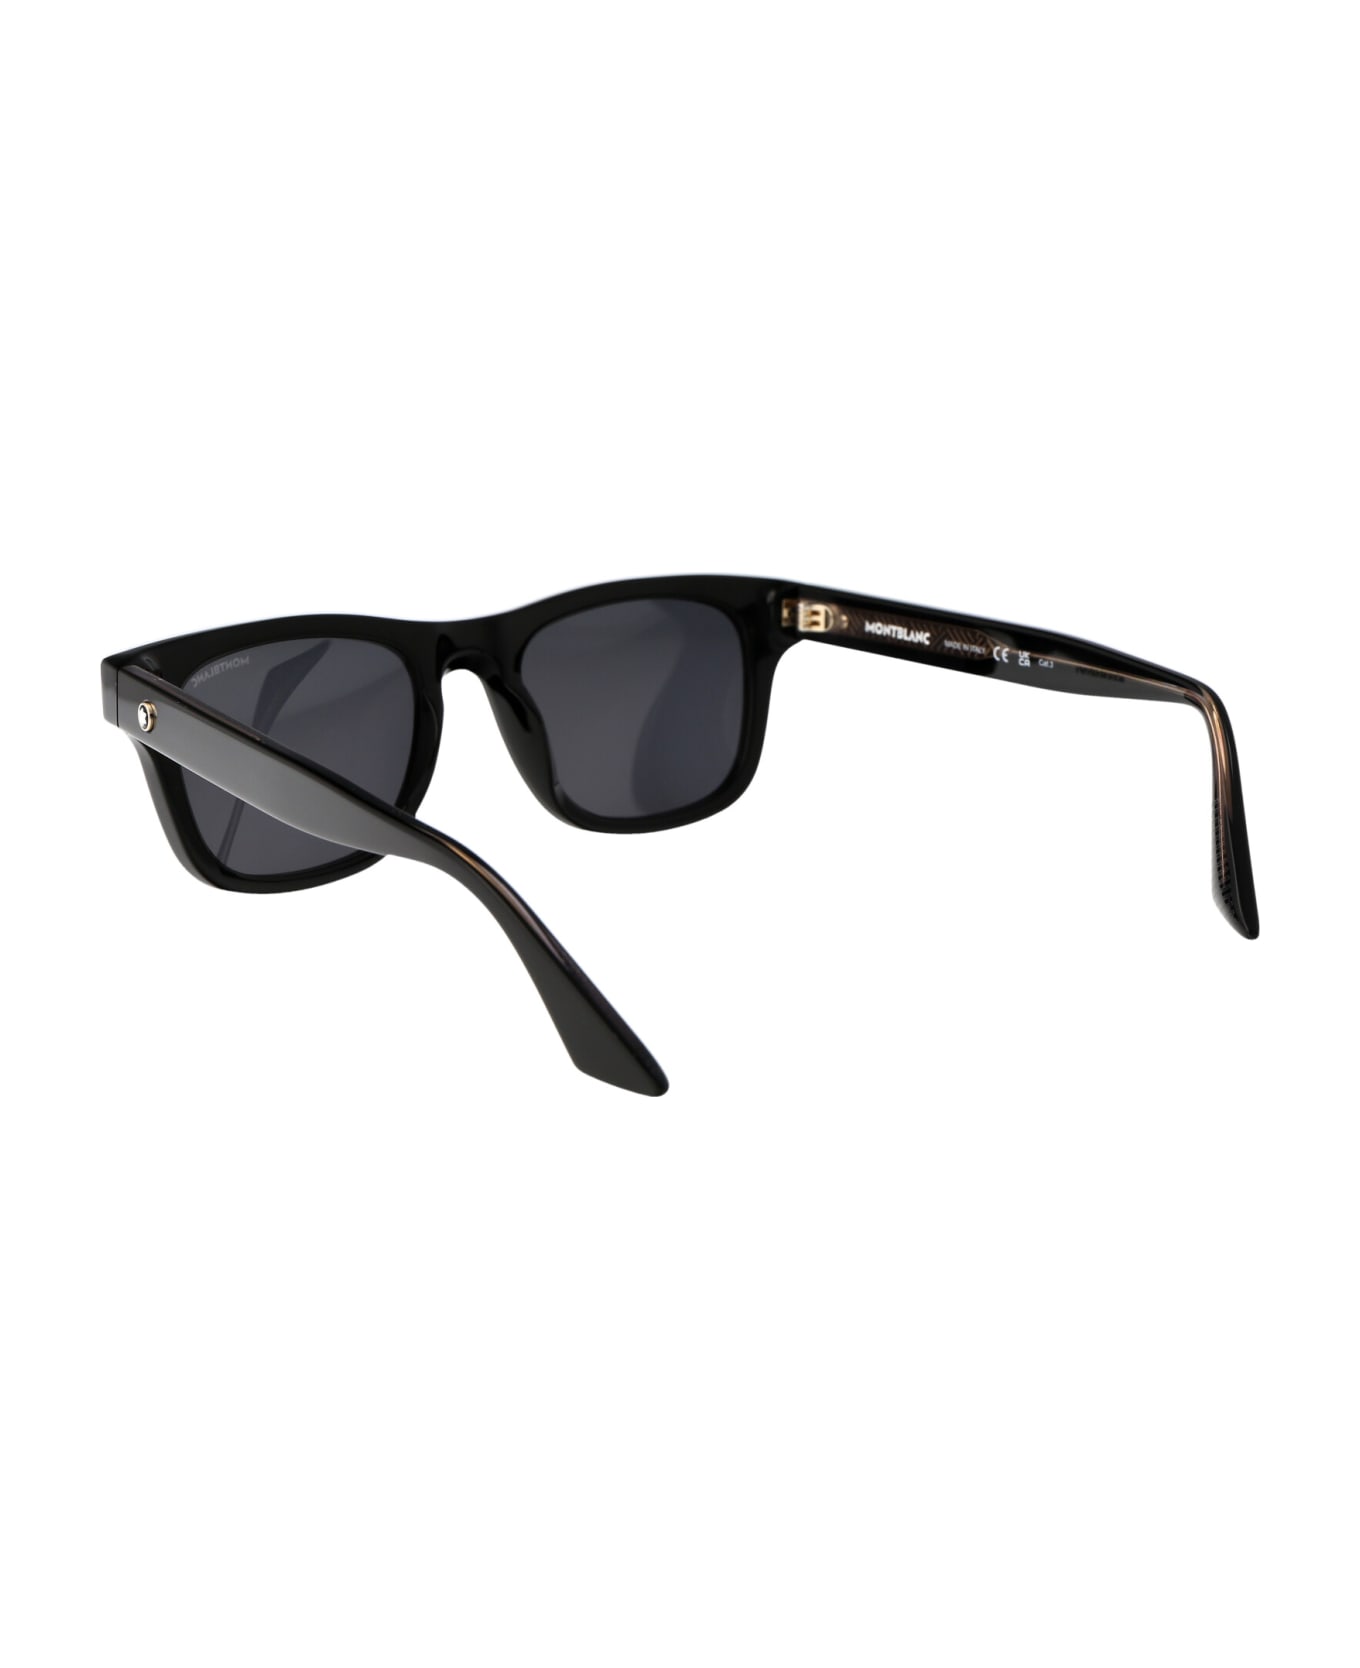 Montblanc Mb0254s Sunglasses - 001 BLACK BLACK SMOKE サングラス